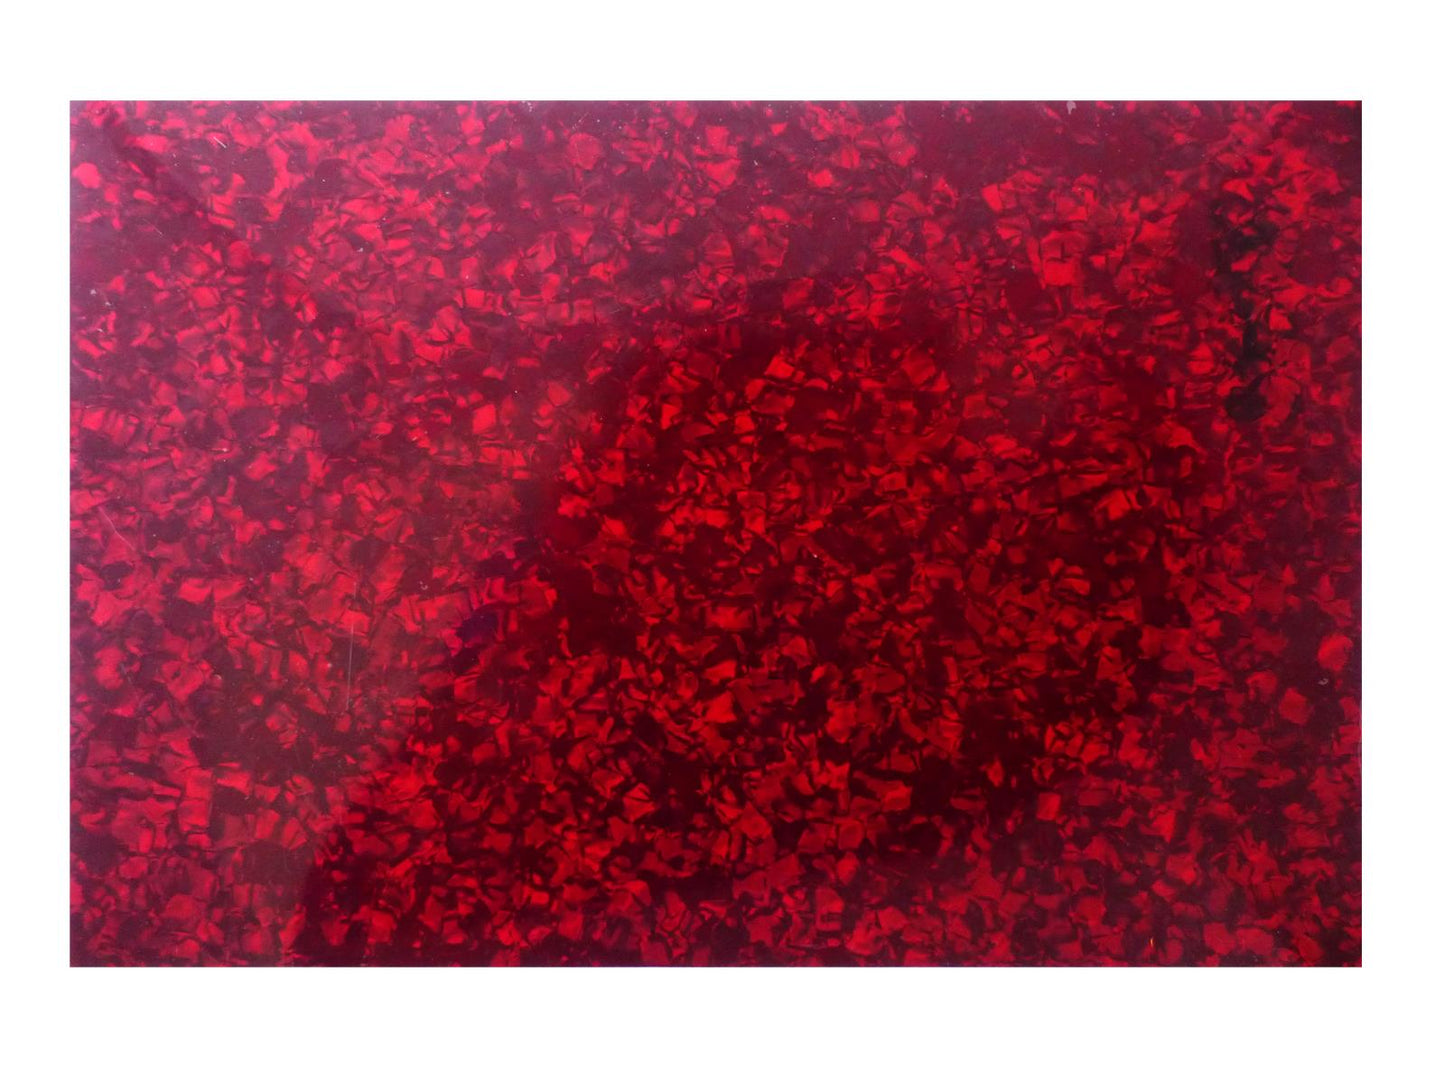 Incudo Red Pearloid Celluloid Sheet - 430x290x0.75mm (16.9x11.42x0.03")